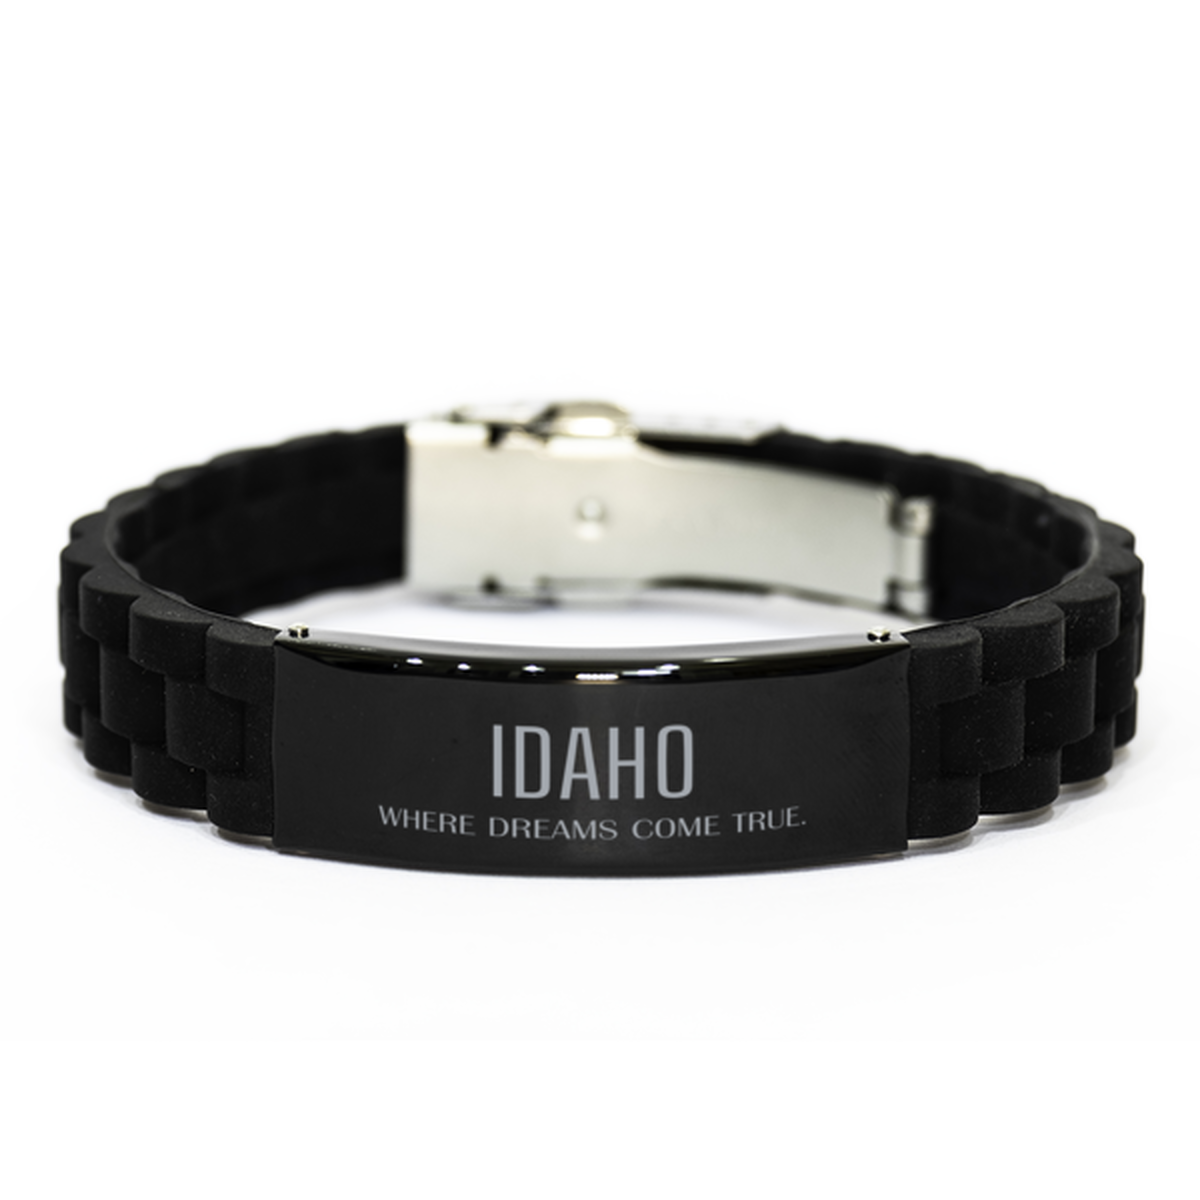 Love Idaho State Black Glidelock Clasp Bracelet, Idaho Where dreams come true, Birthday Inspirational Gifts For Idaho Men, Women, Friends